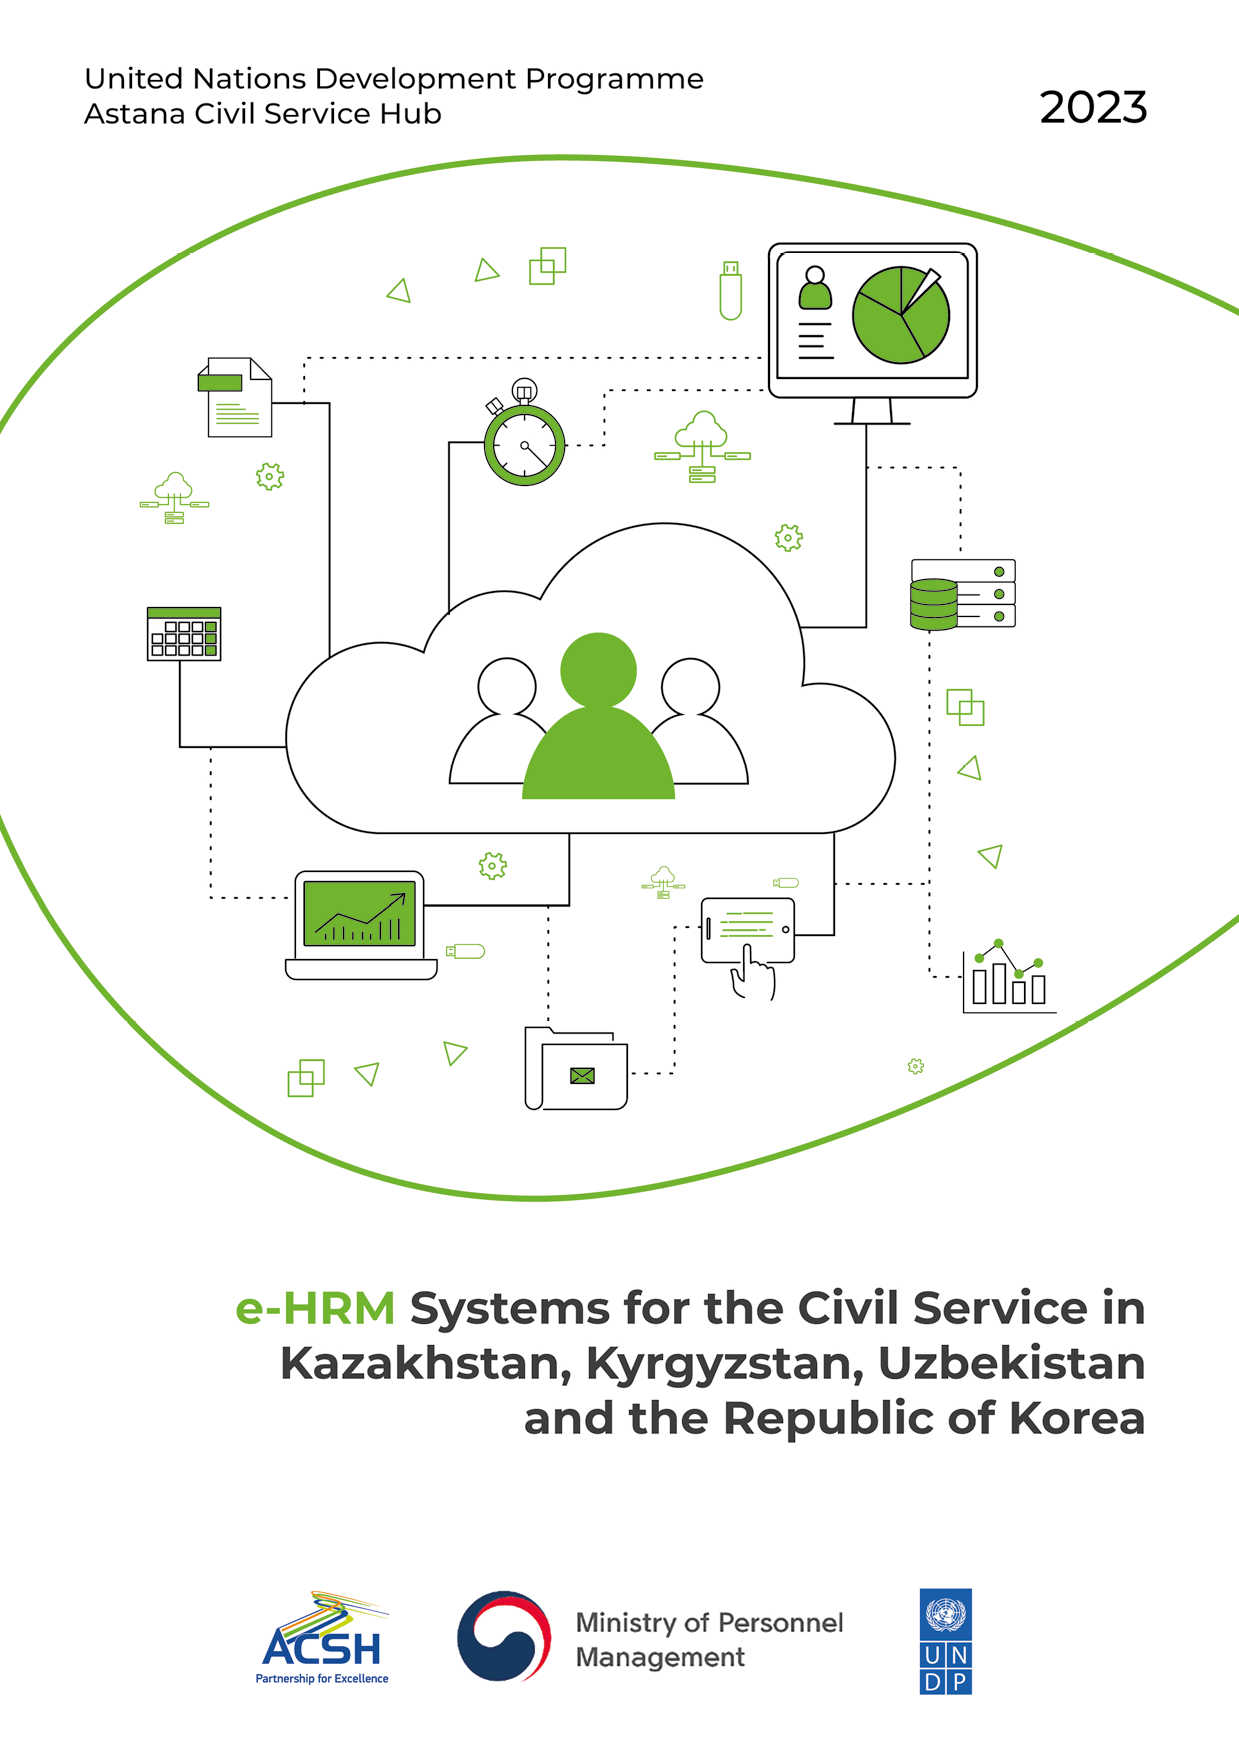 e-HRM Systems for the Civil Service in Kazakhstan, Kyrgyzstan, Uzbekistan, and the Republic of Korea